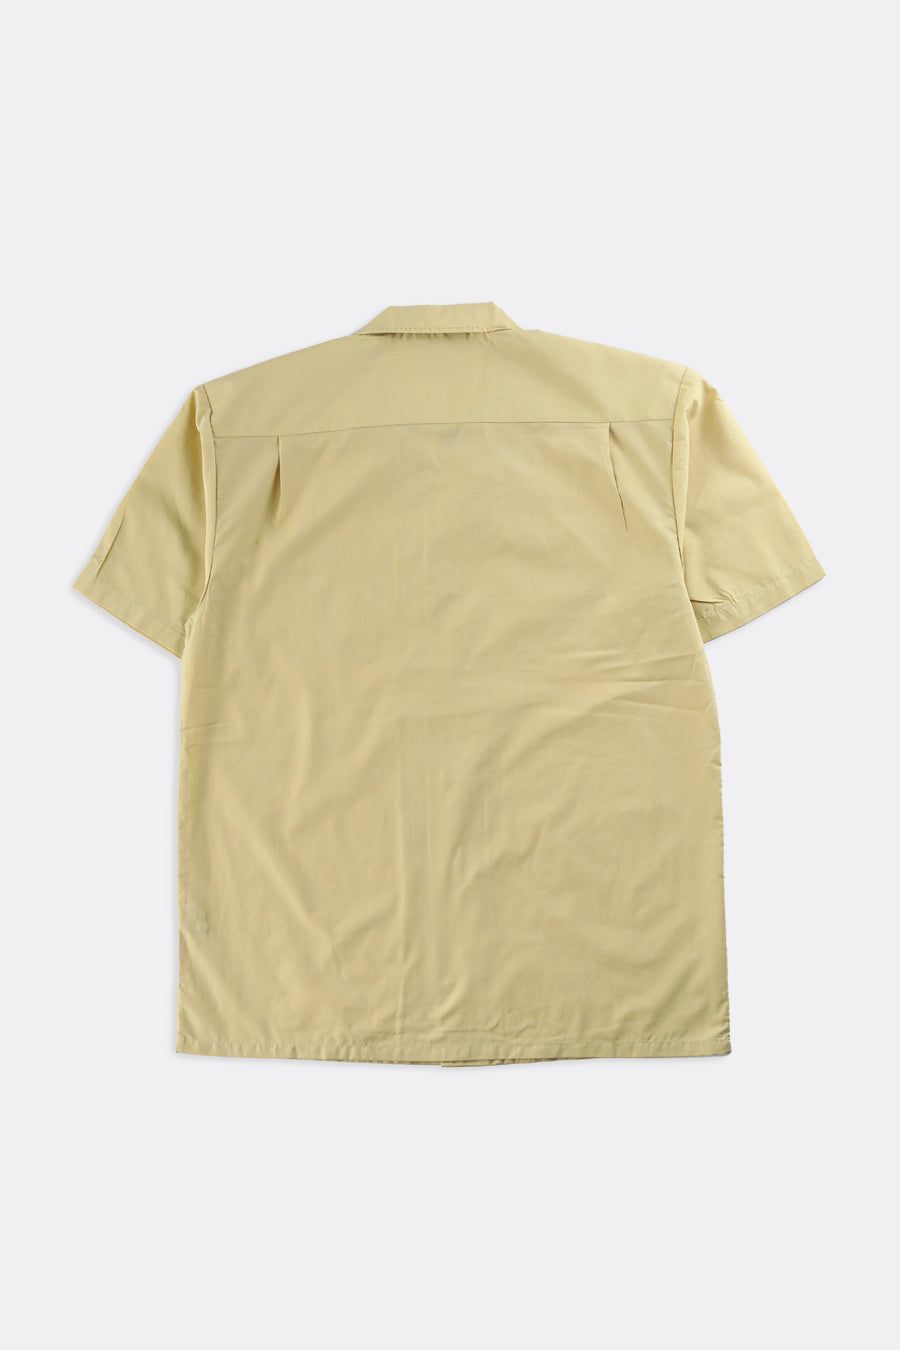 Deadstock Dragonfly Camp Shirt - XL, XXL